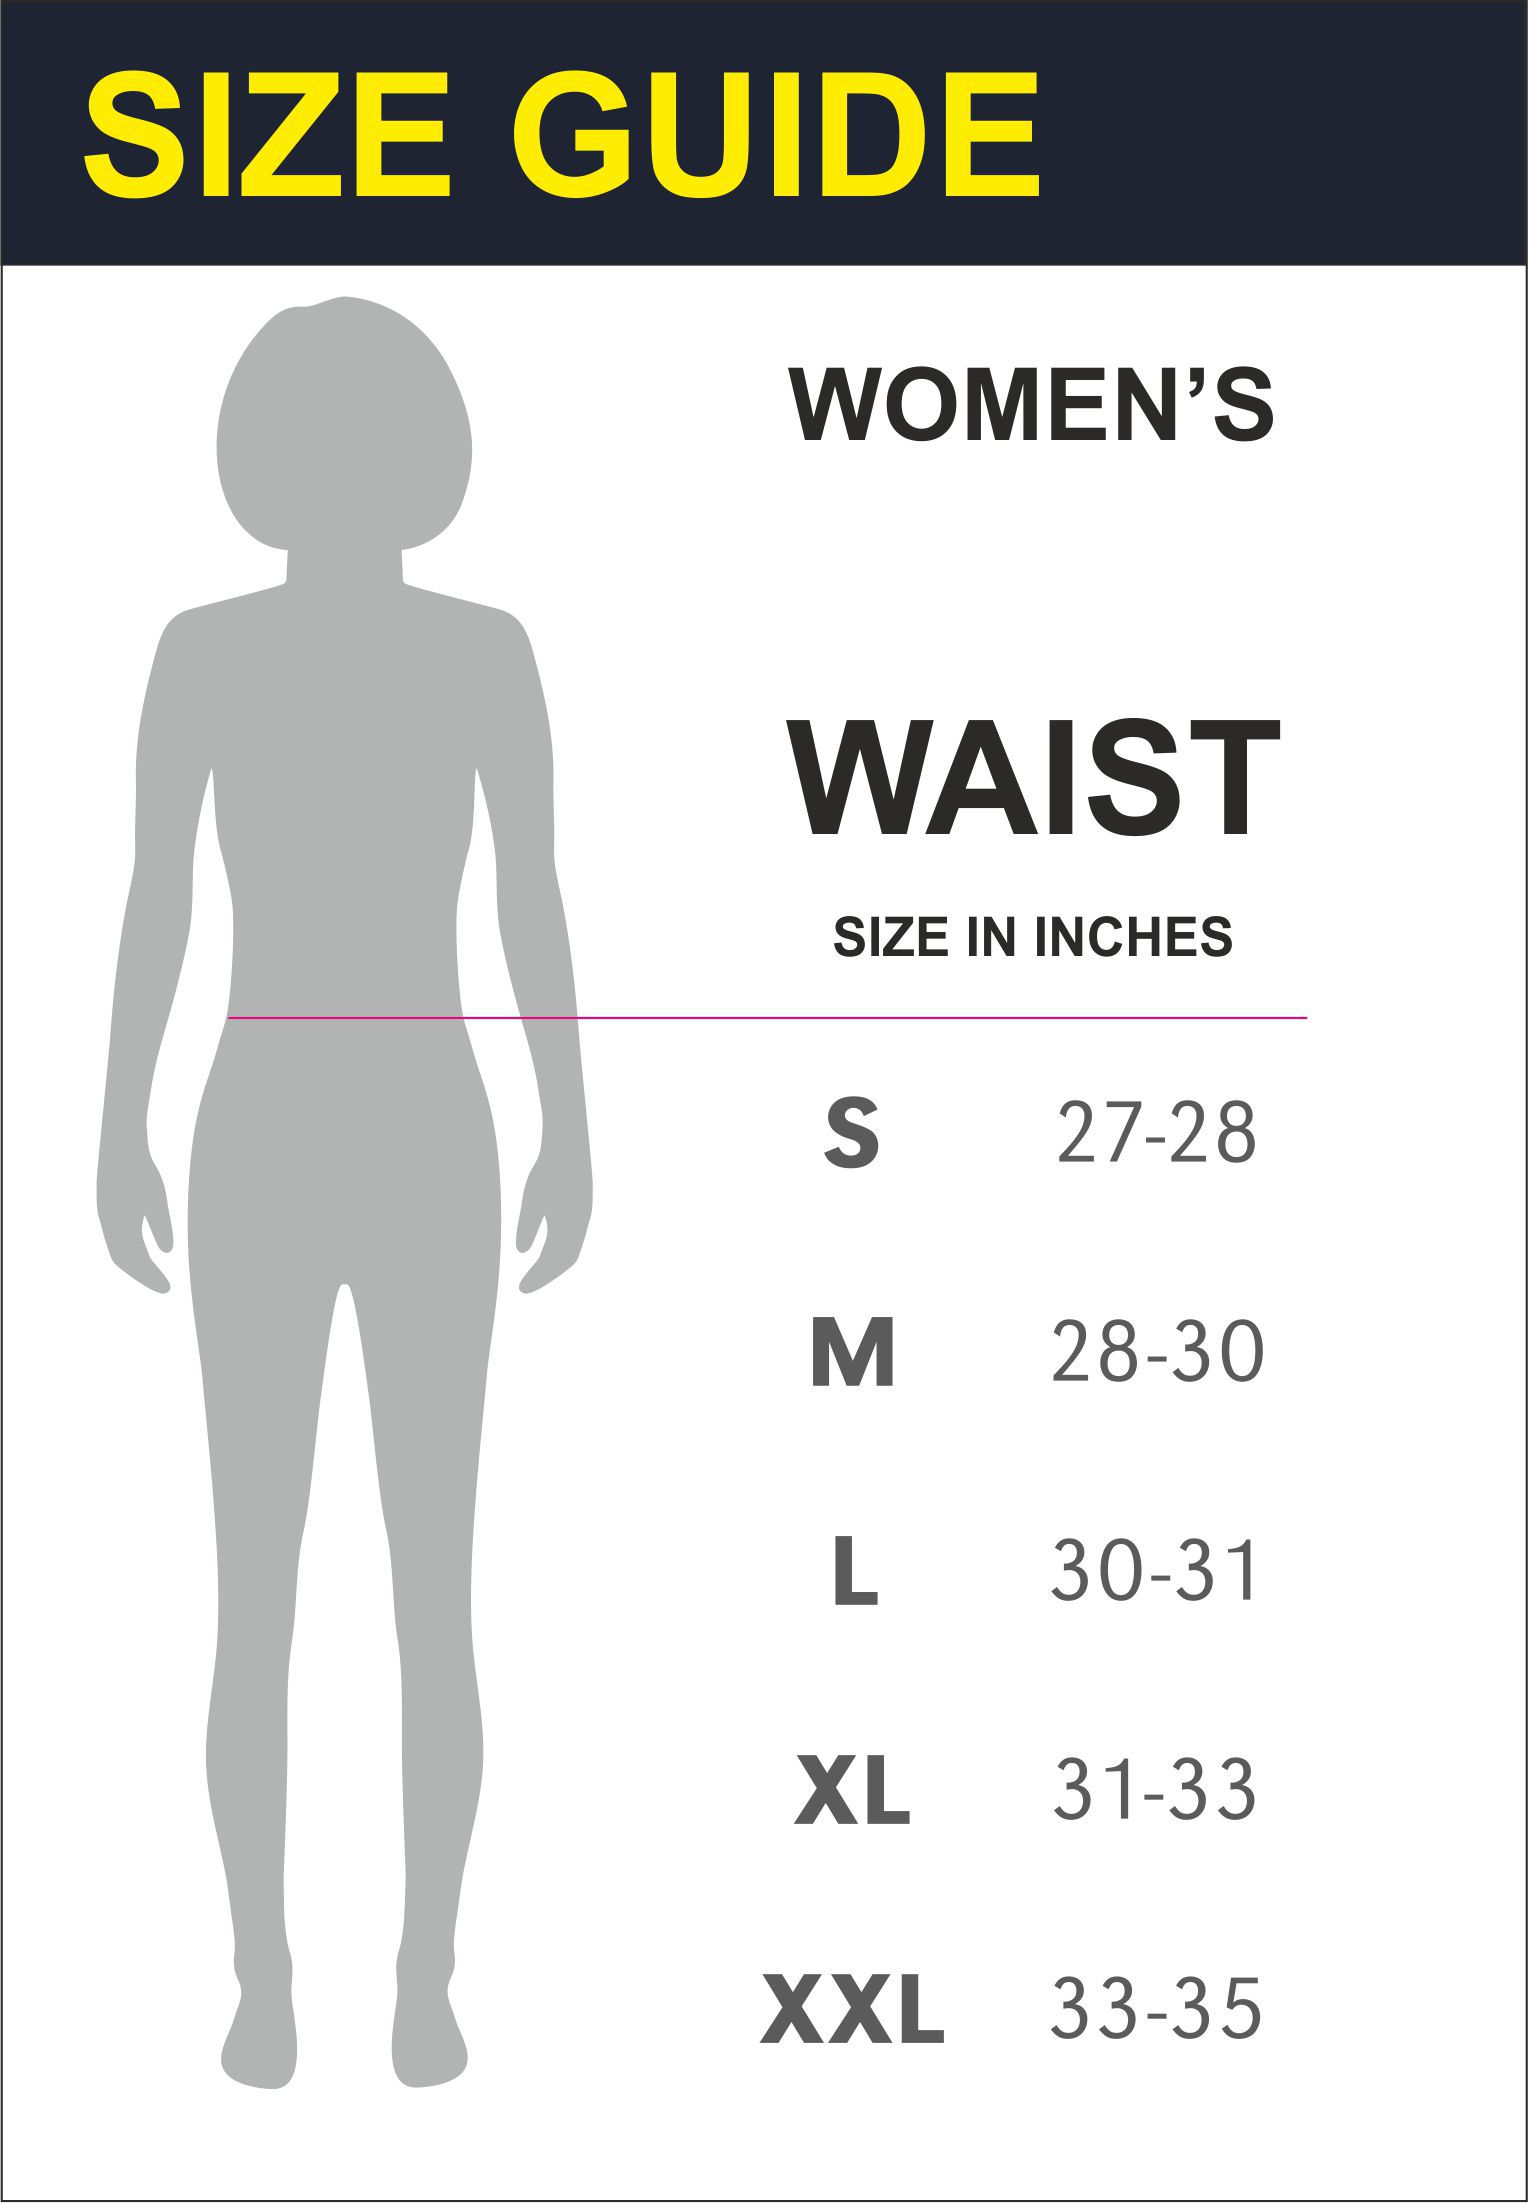 Waist Size Guide